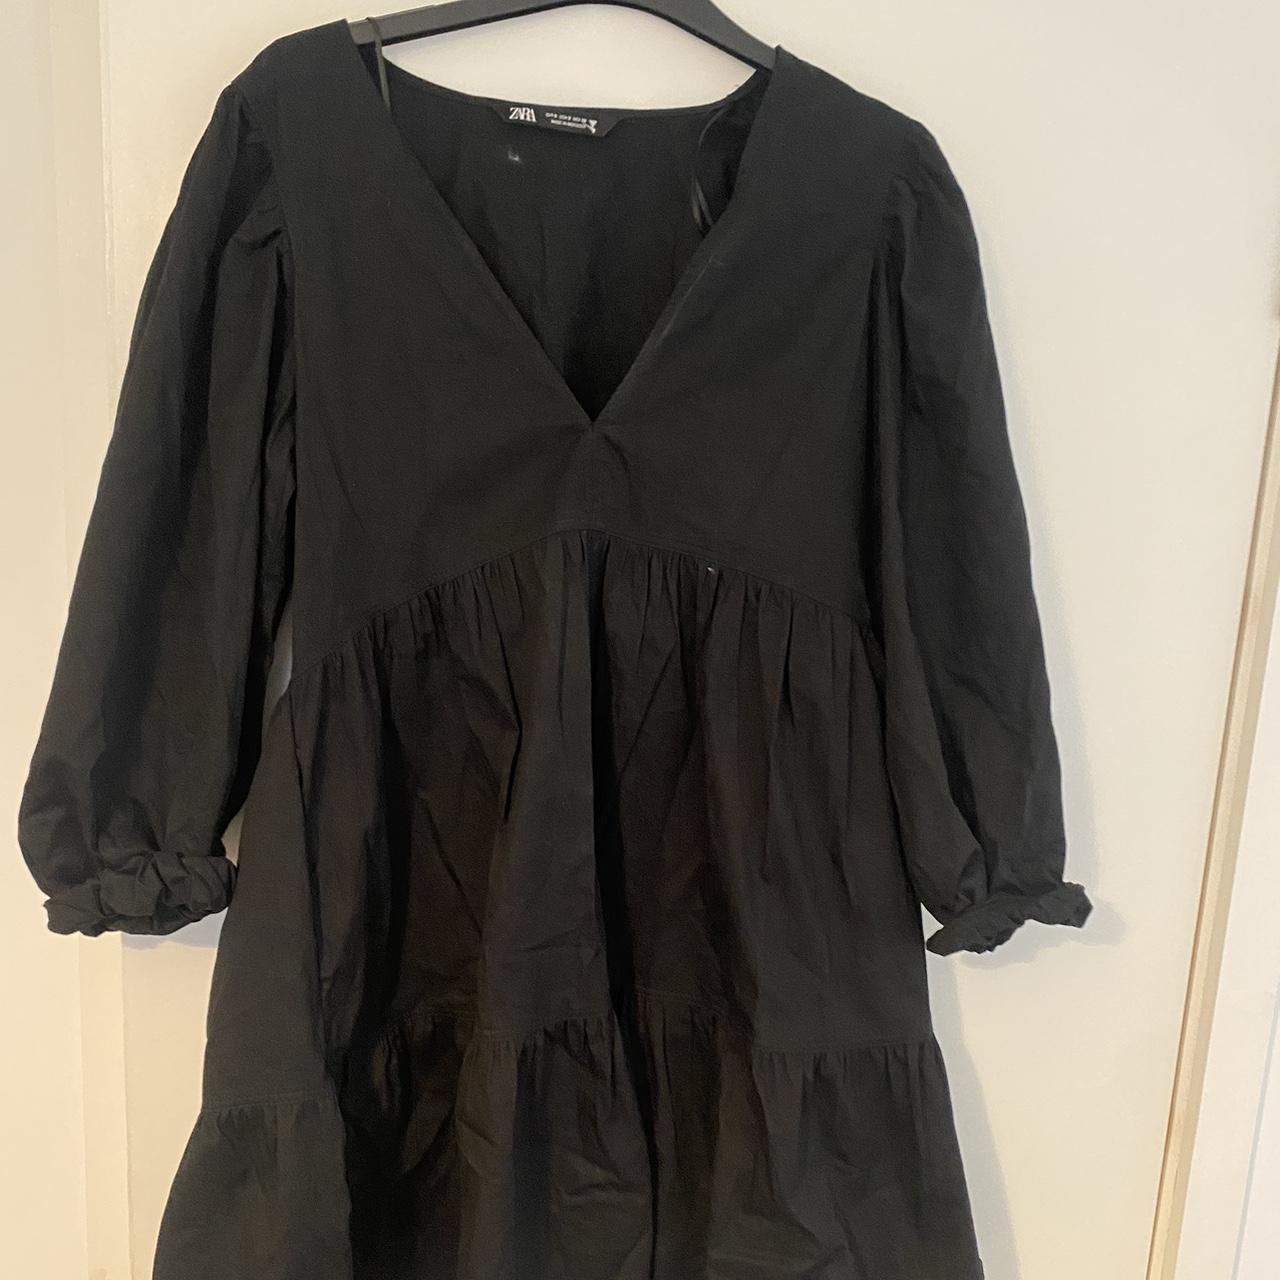 Zara black smock dress - Depop